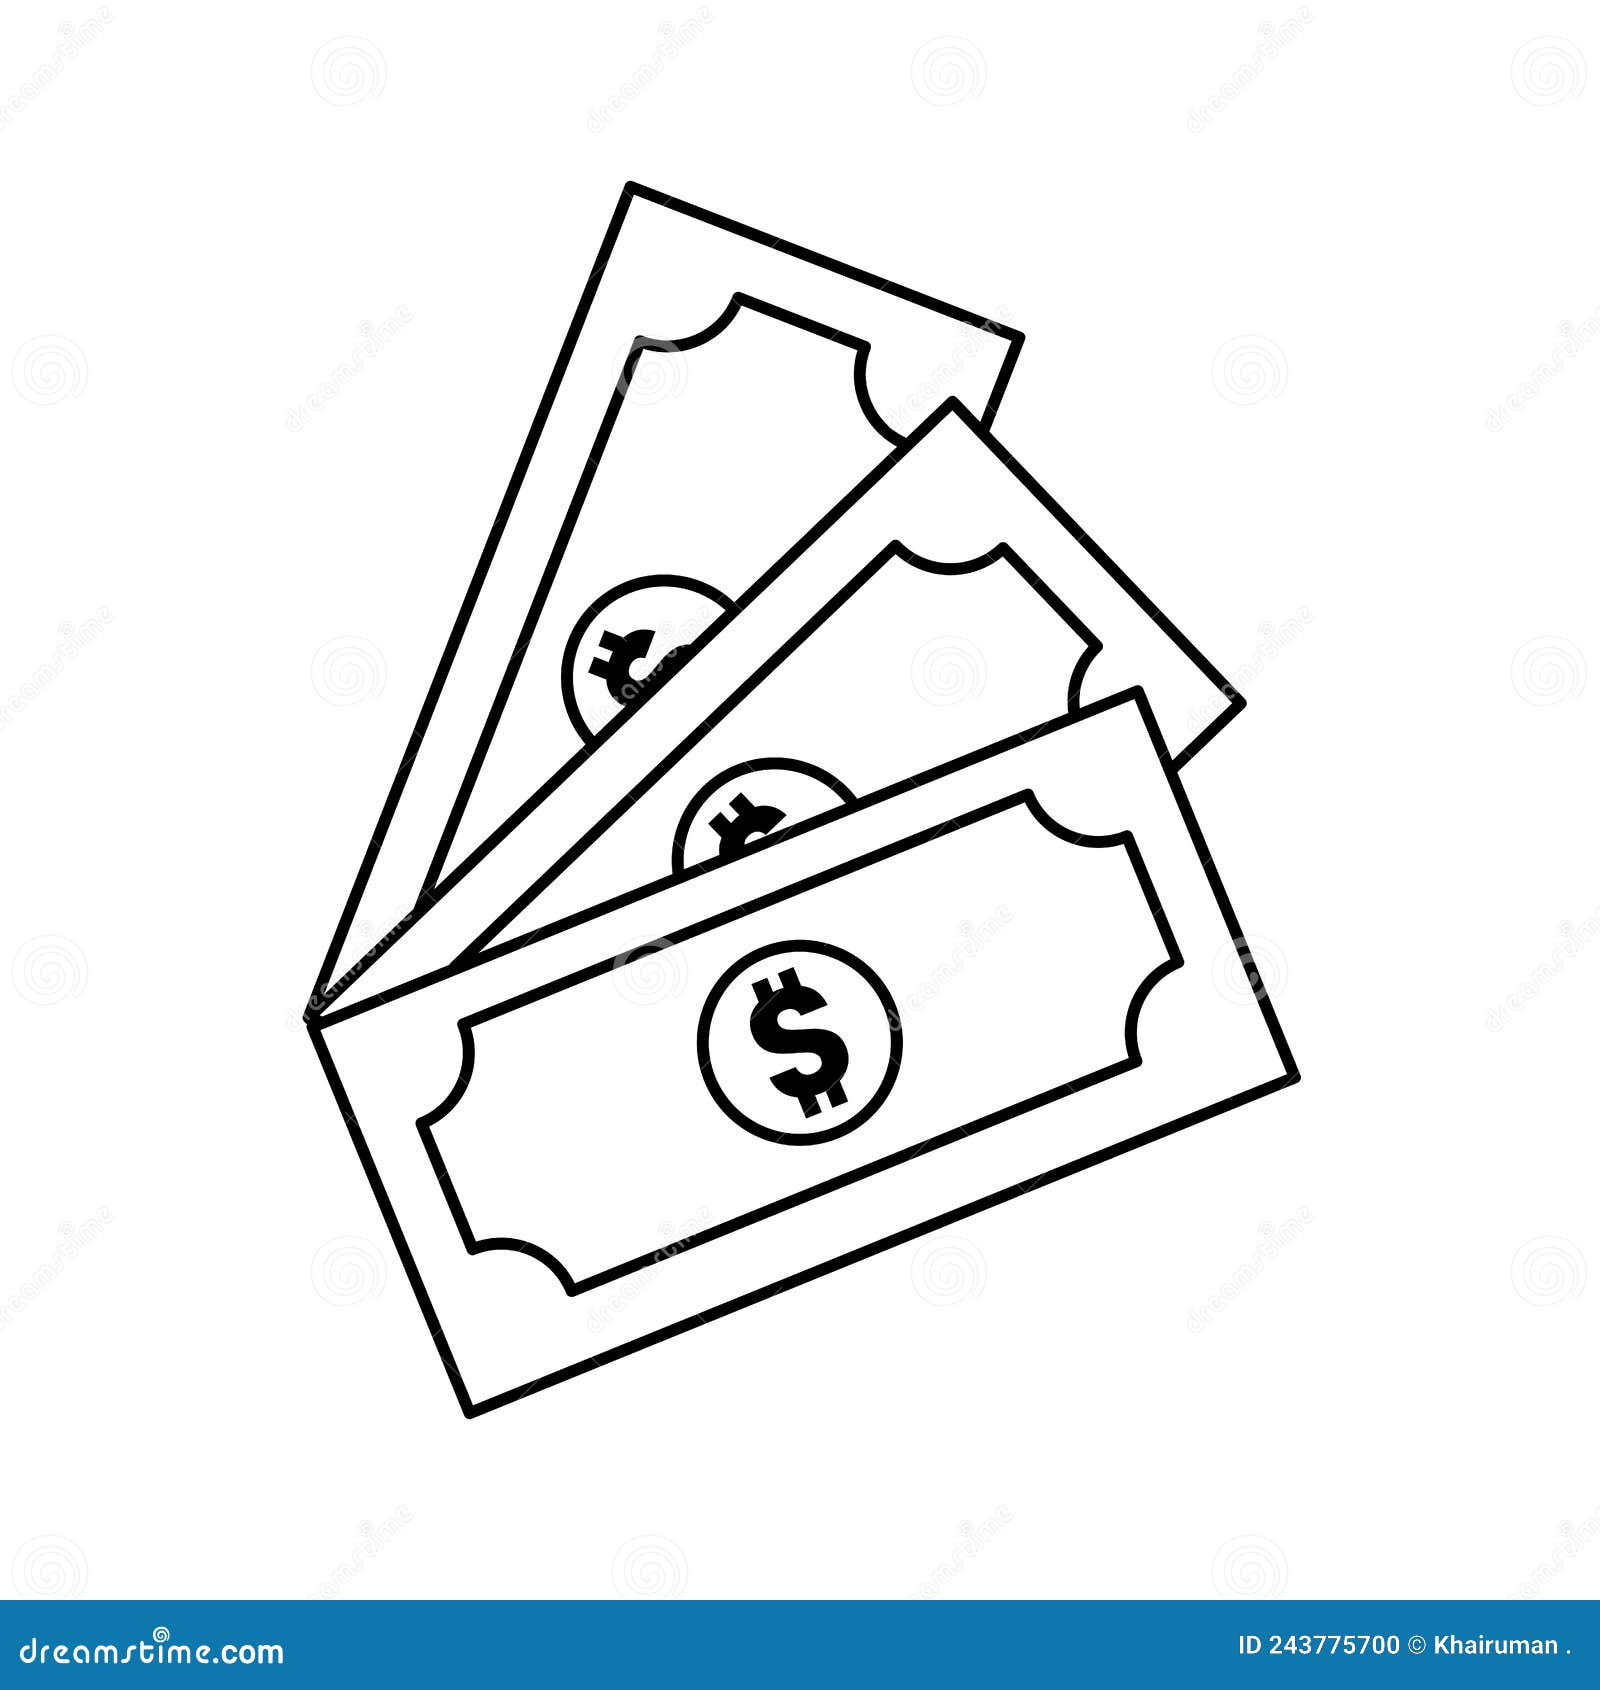 Dollars Cash Outline Icon Illustration on White Background Stock Vector ...